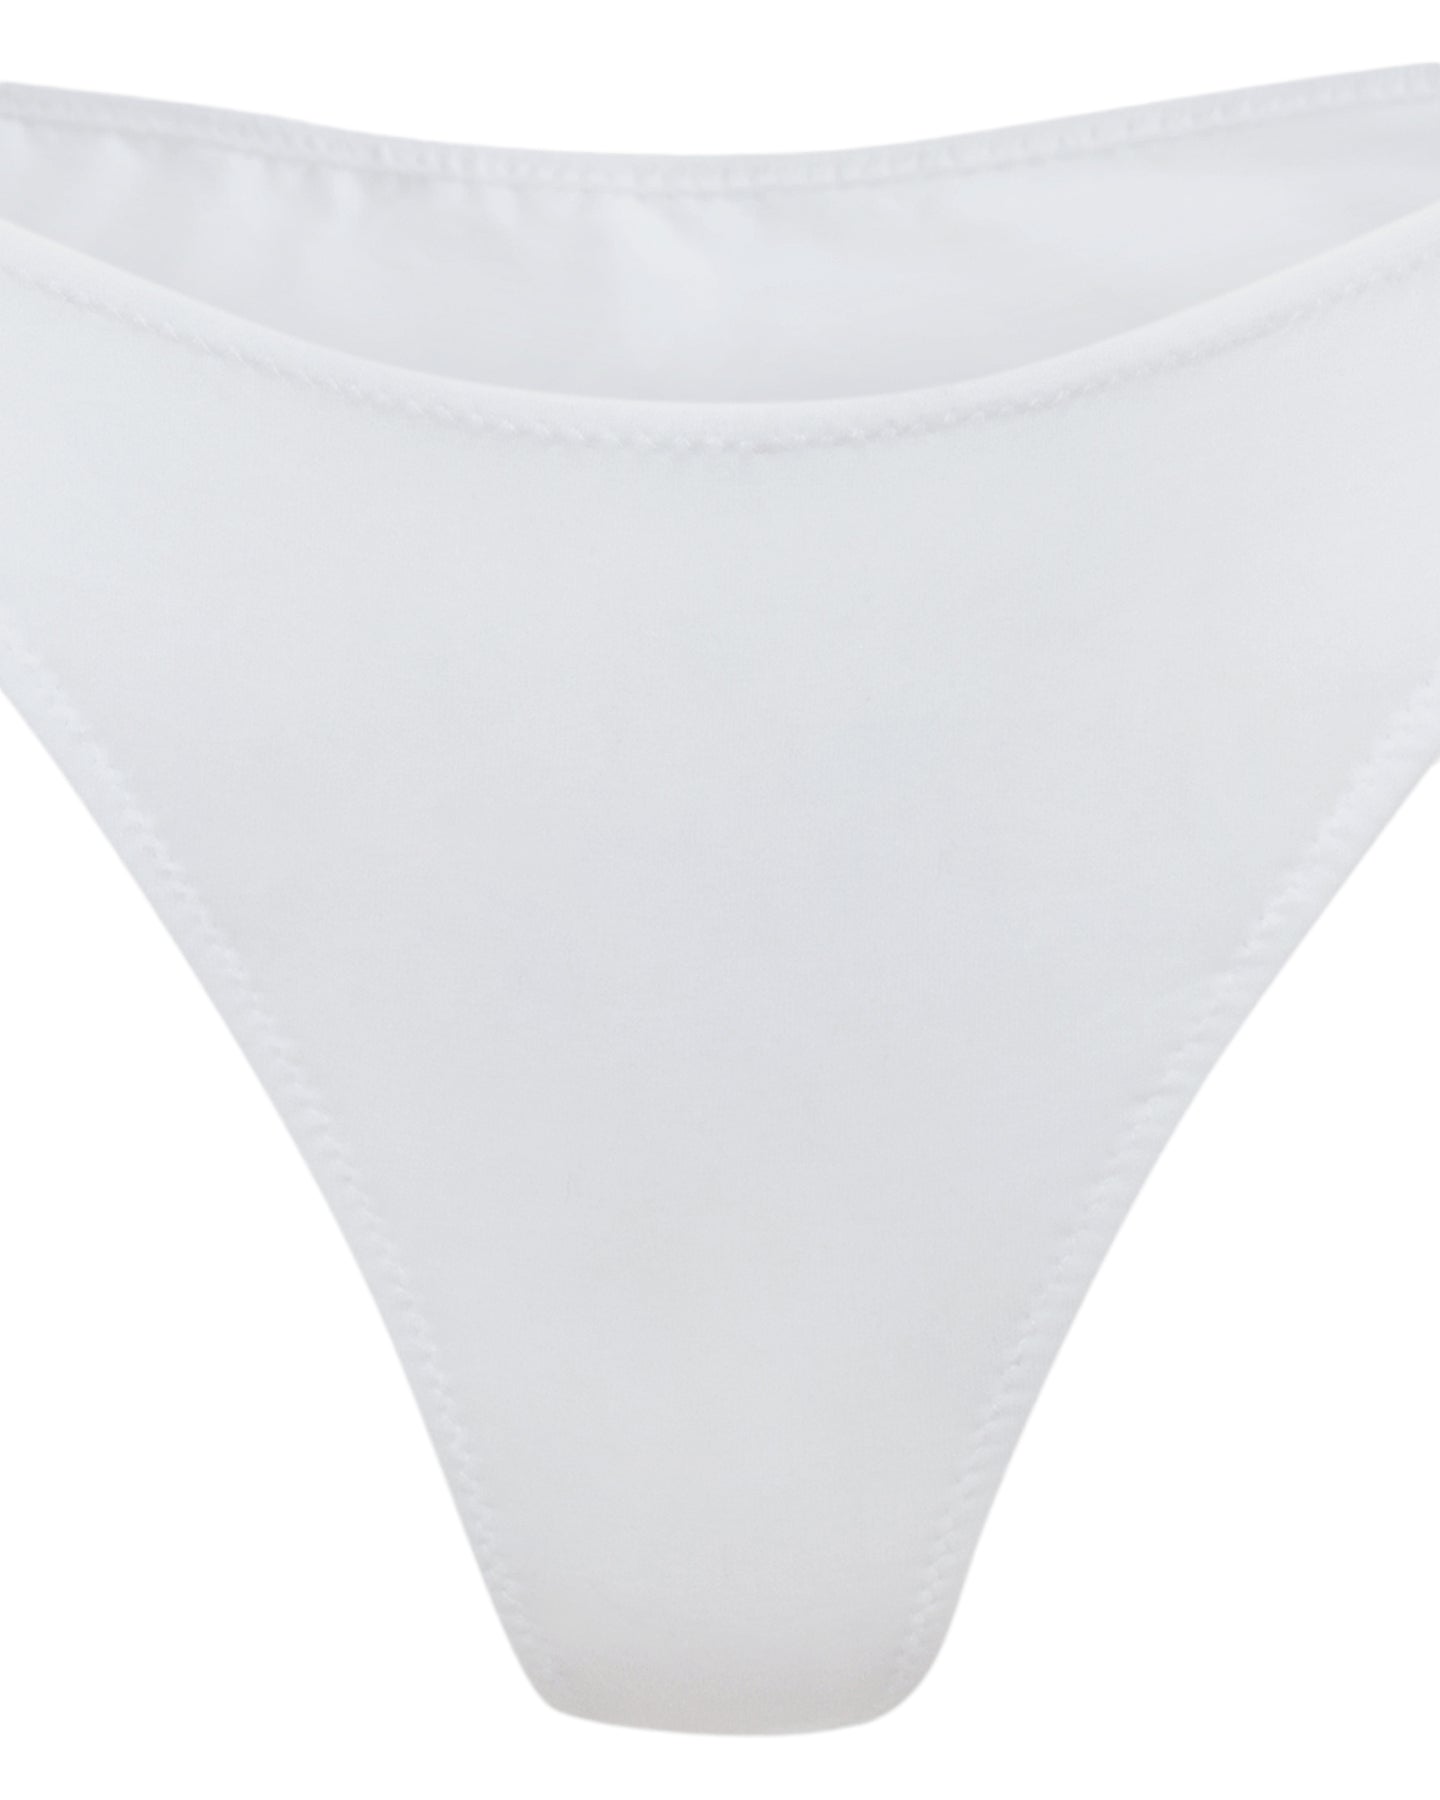 Issy White Organic Cotton High-Waisted Thong, Women's underwear